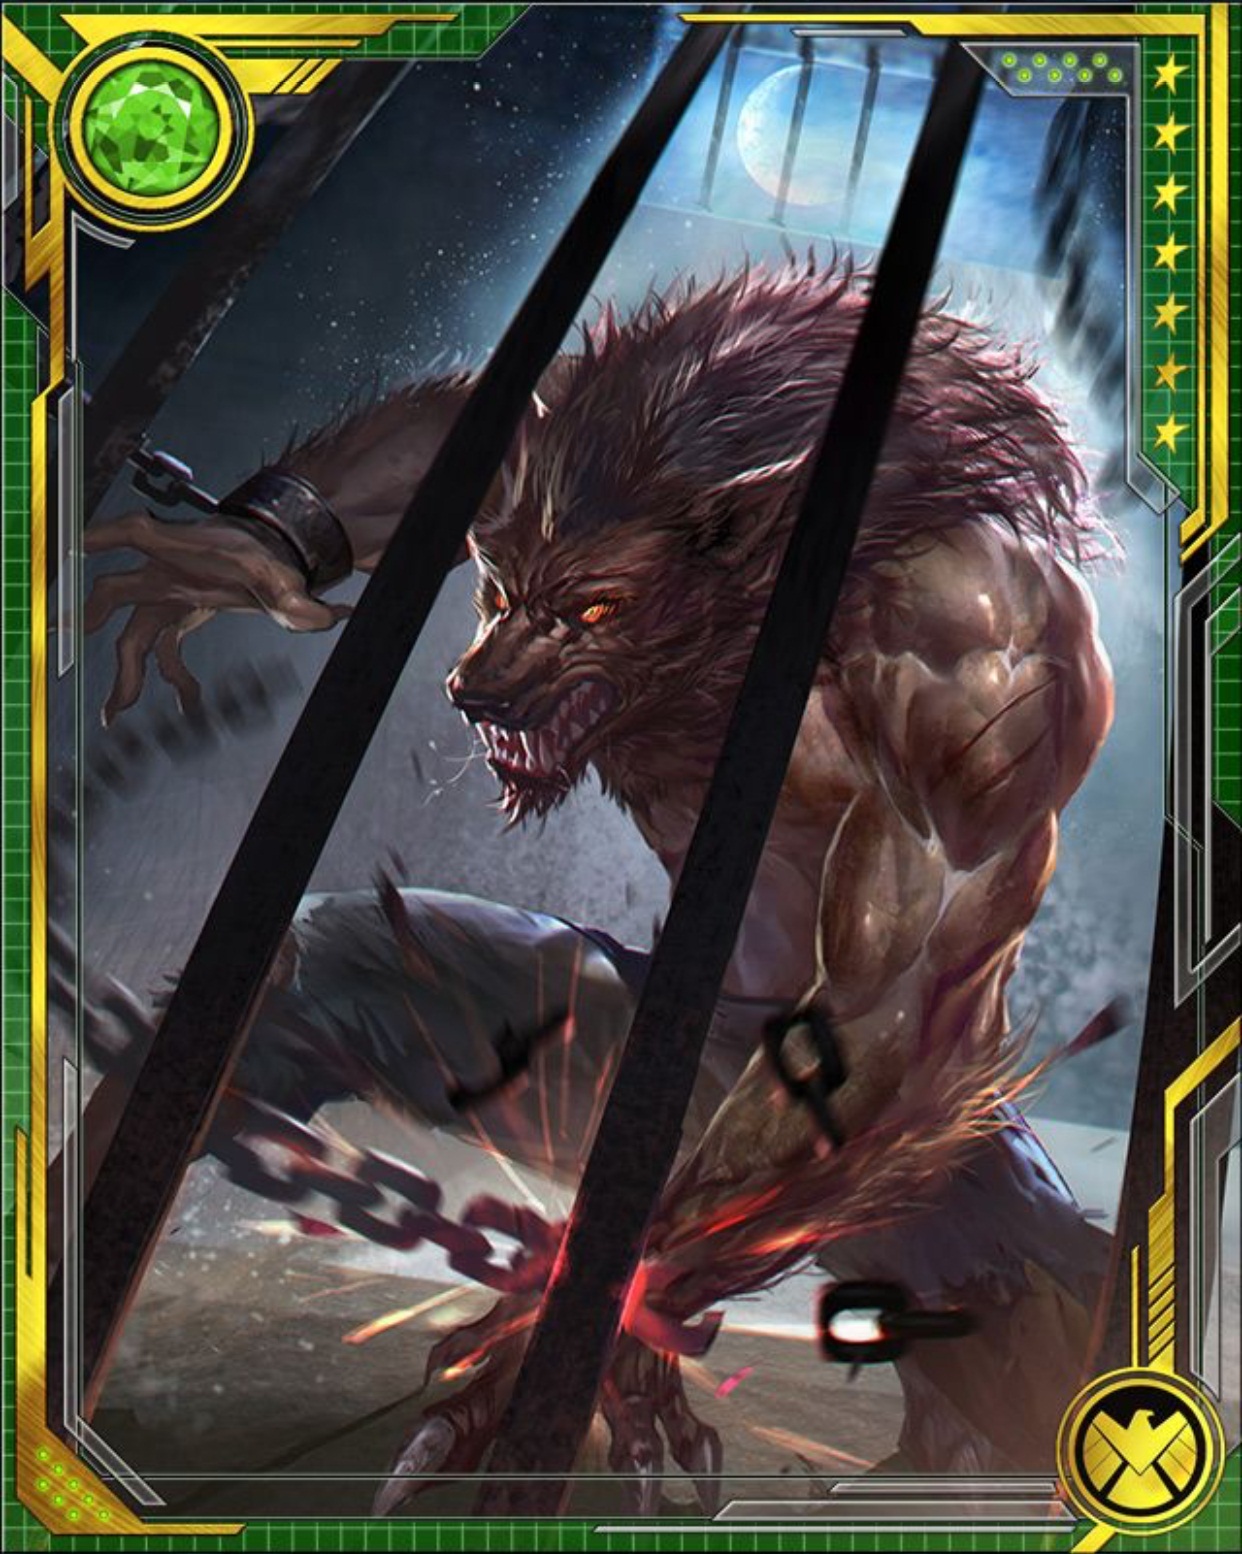 Werewolf by Night (Marvel Cinematic Universe), Heroes Wiki